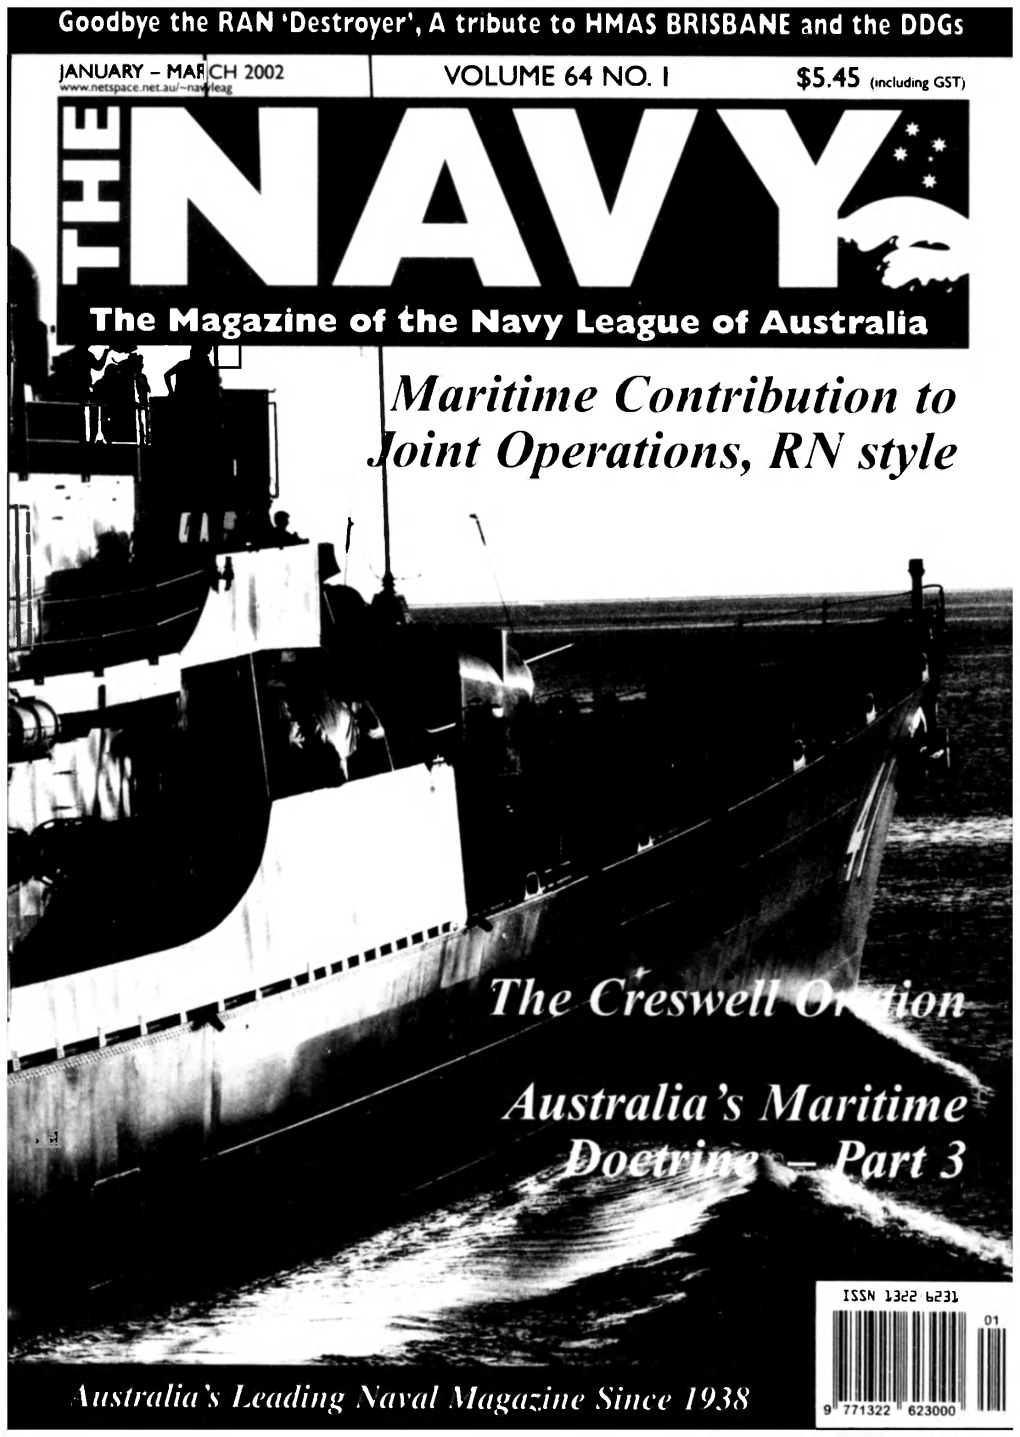 The Navy Vol 64 Part 1 2002